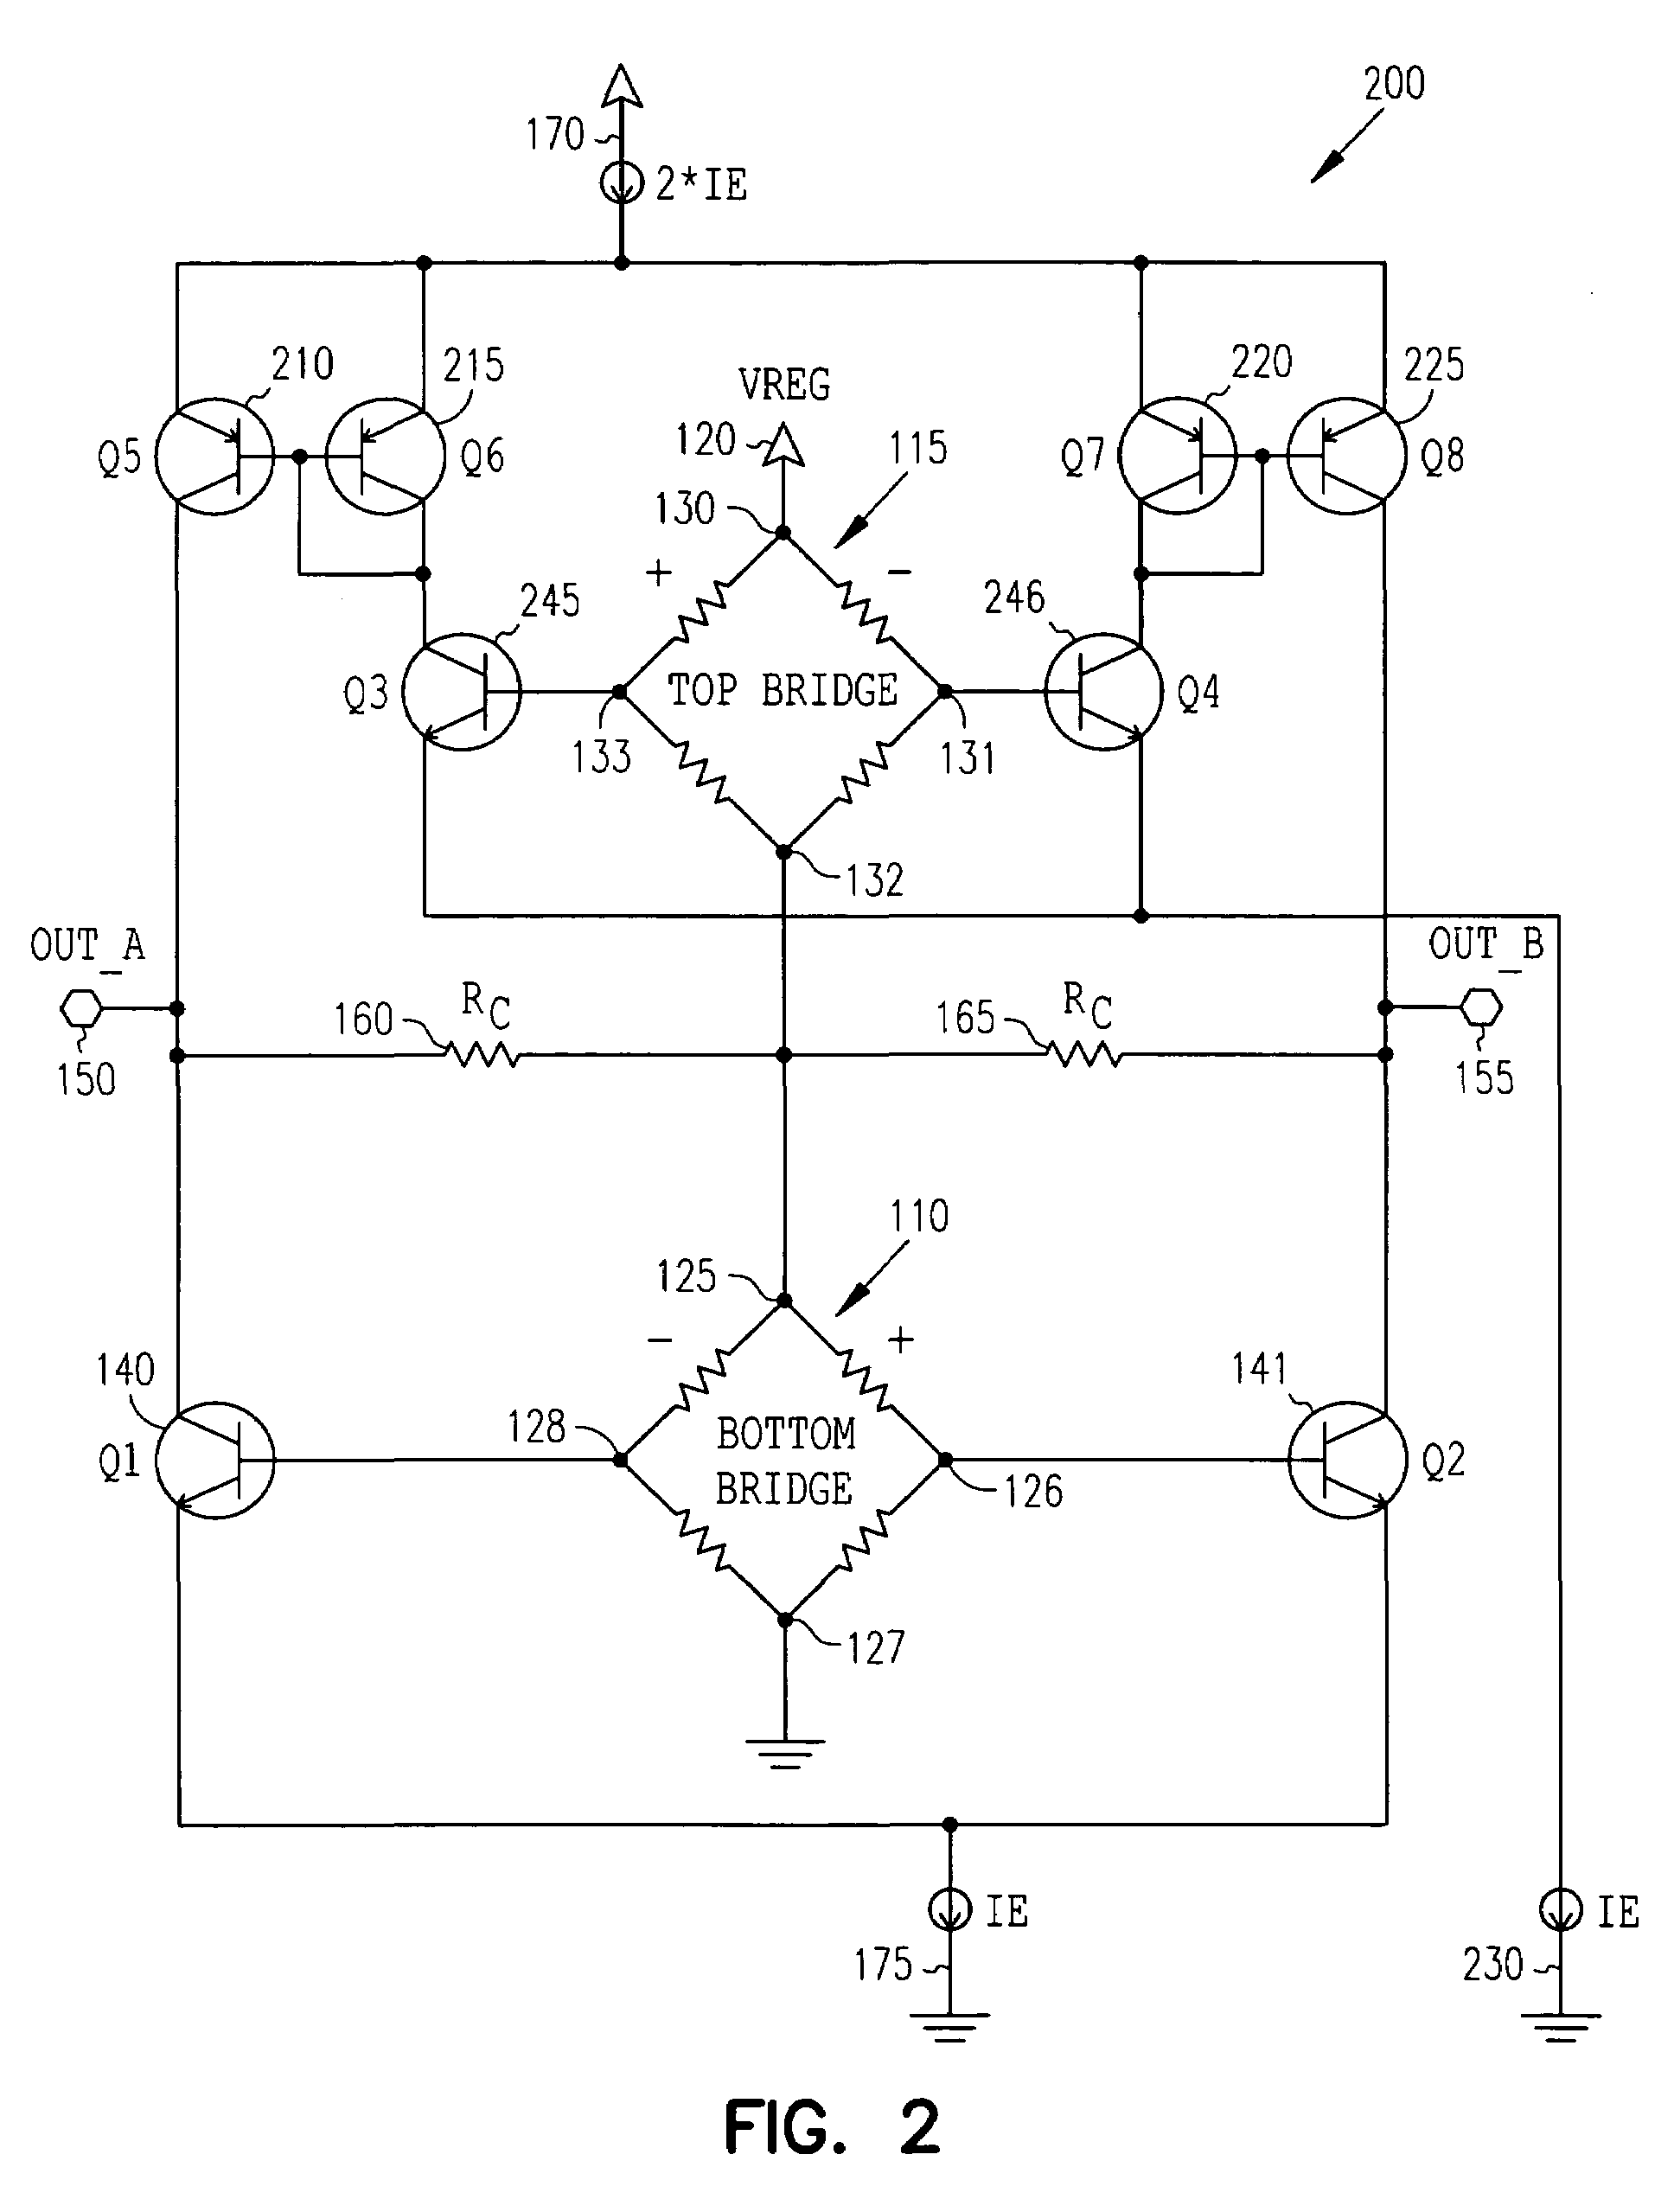 Series bridge circuit with amplifiers